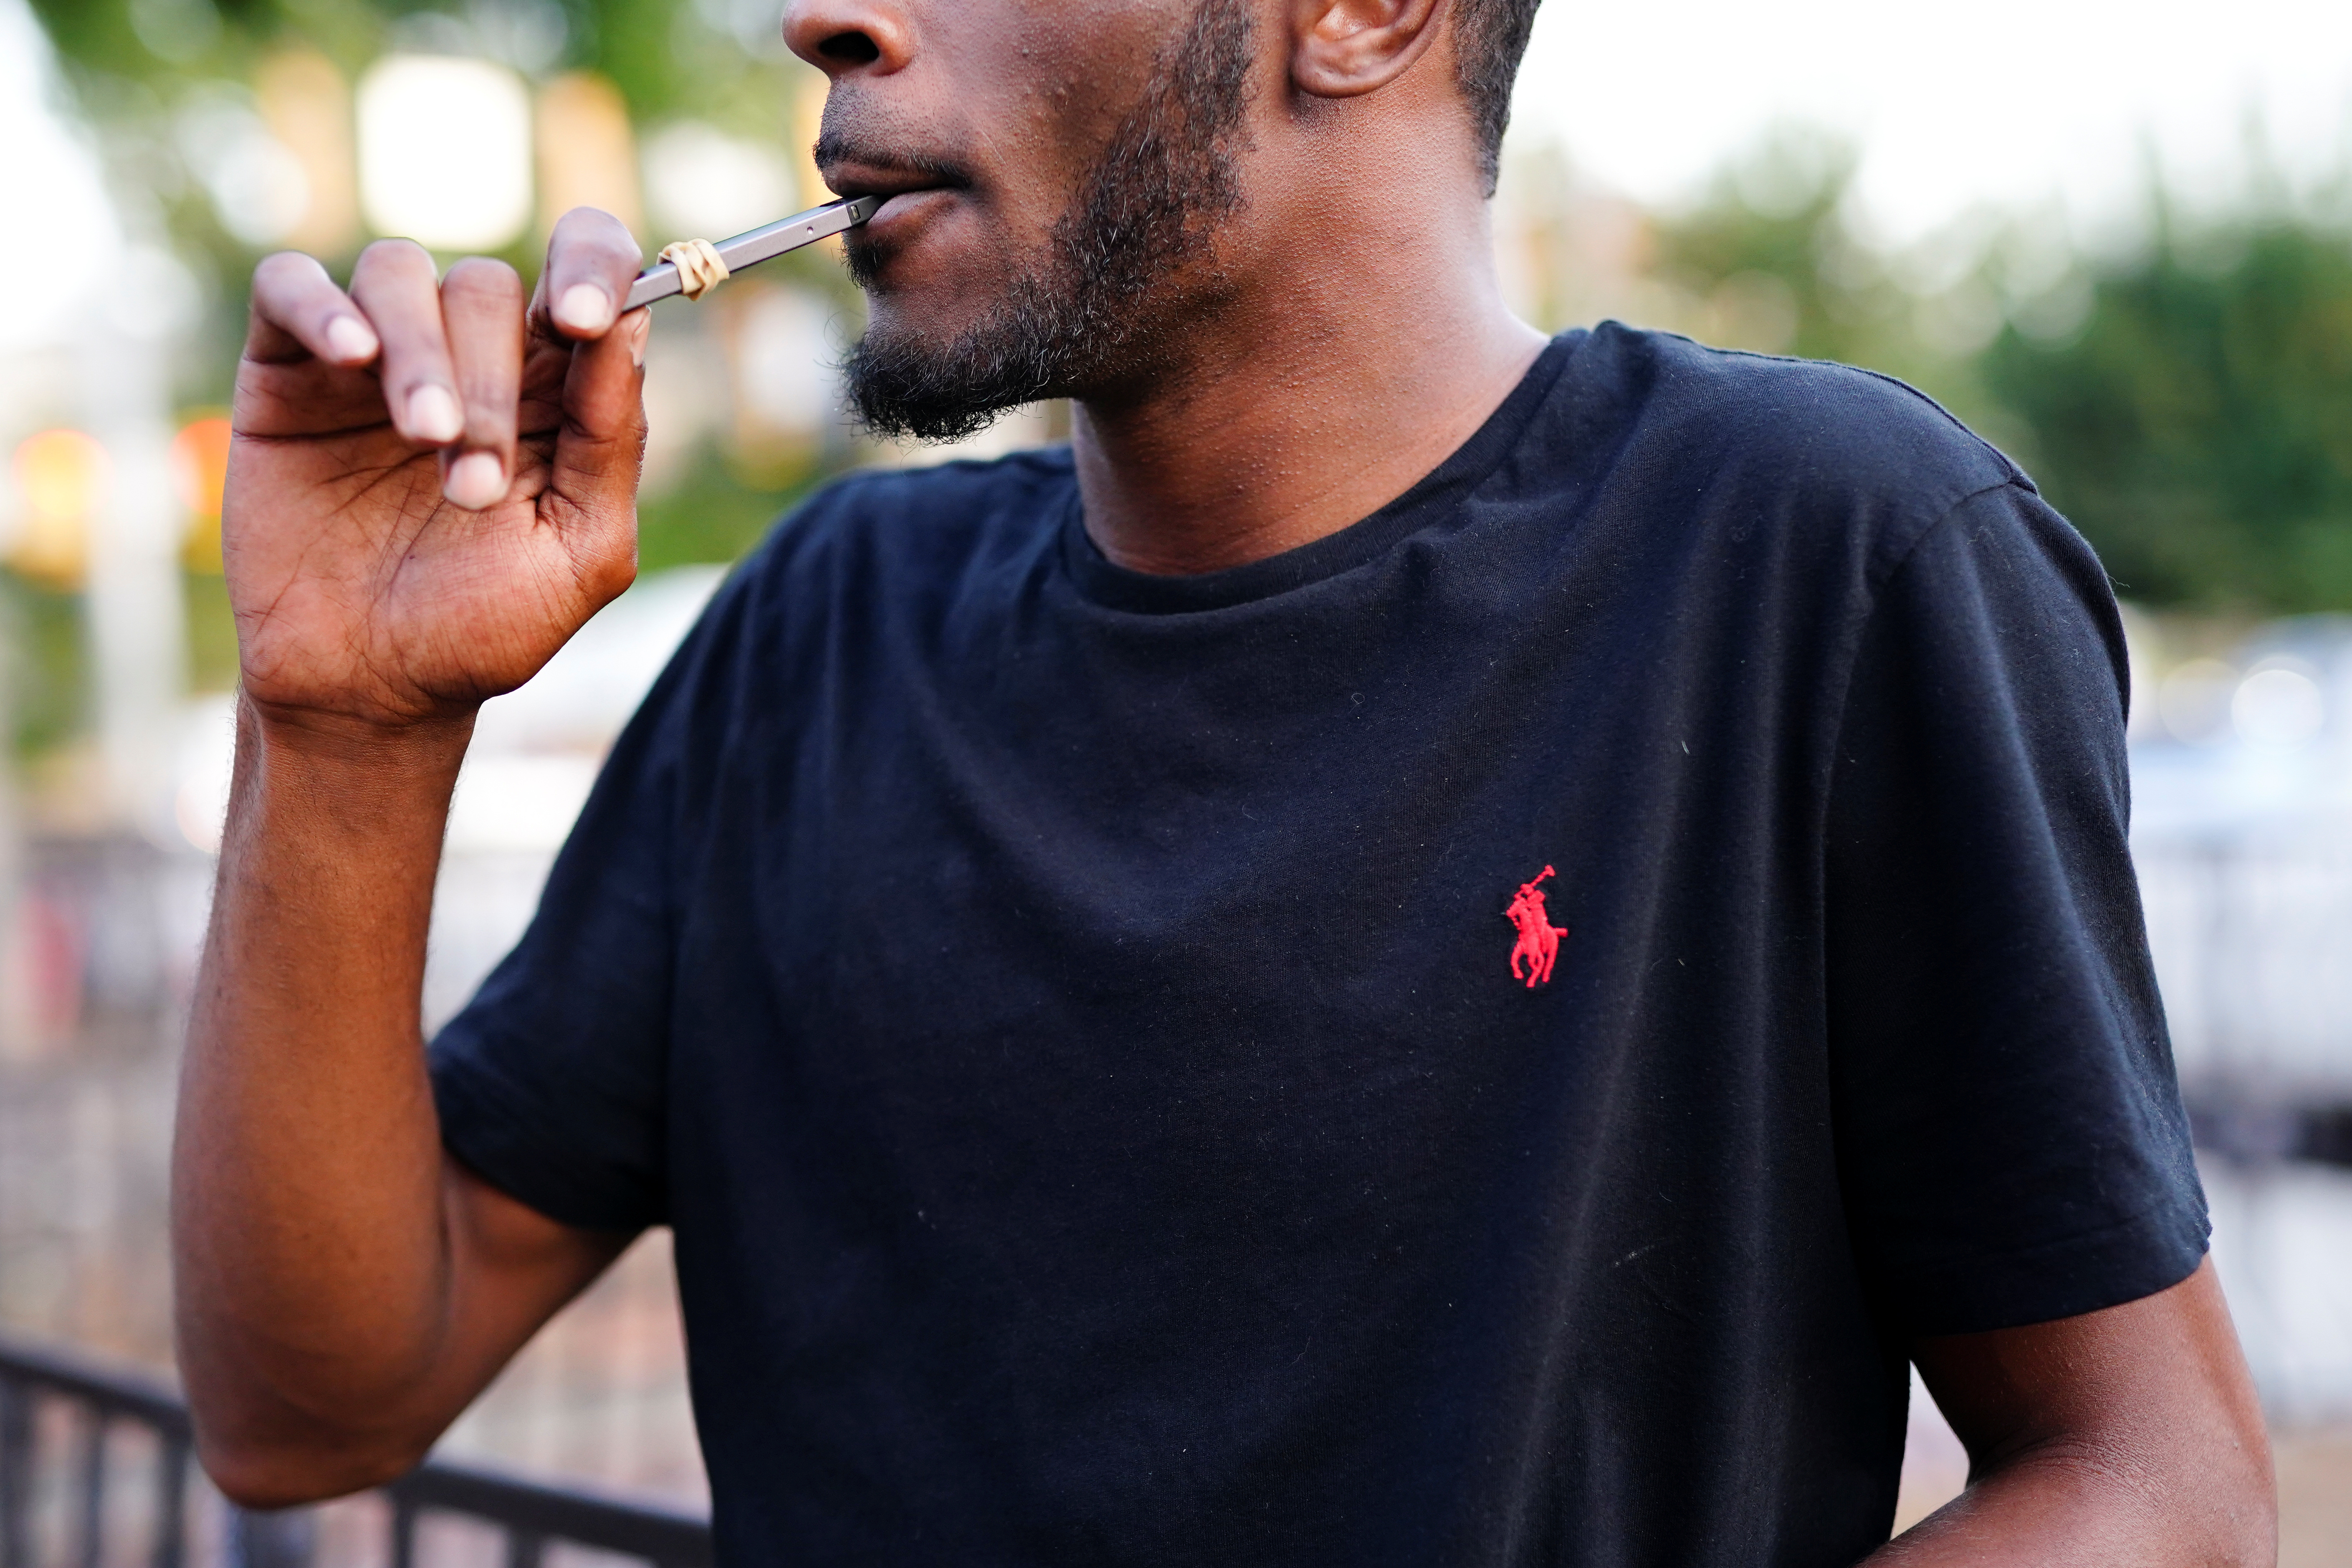 A man uses a Juul vaporizer in Atlanta